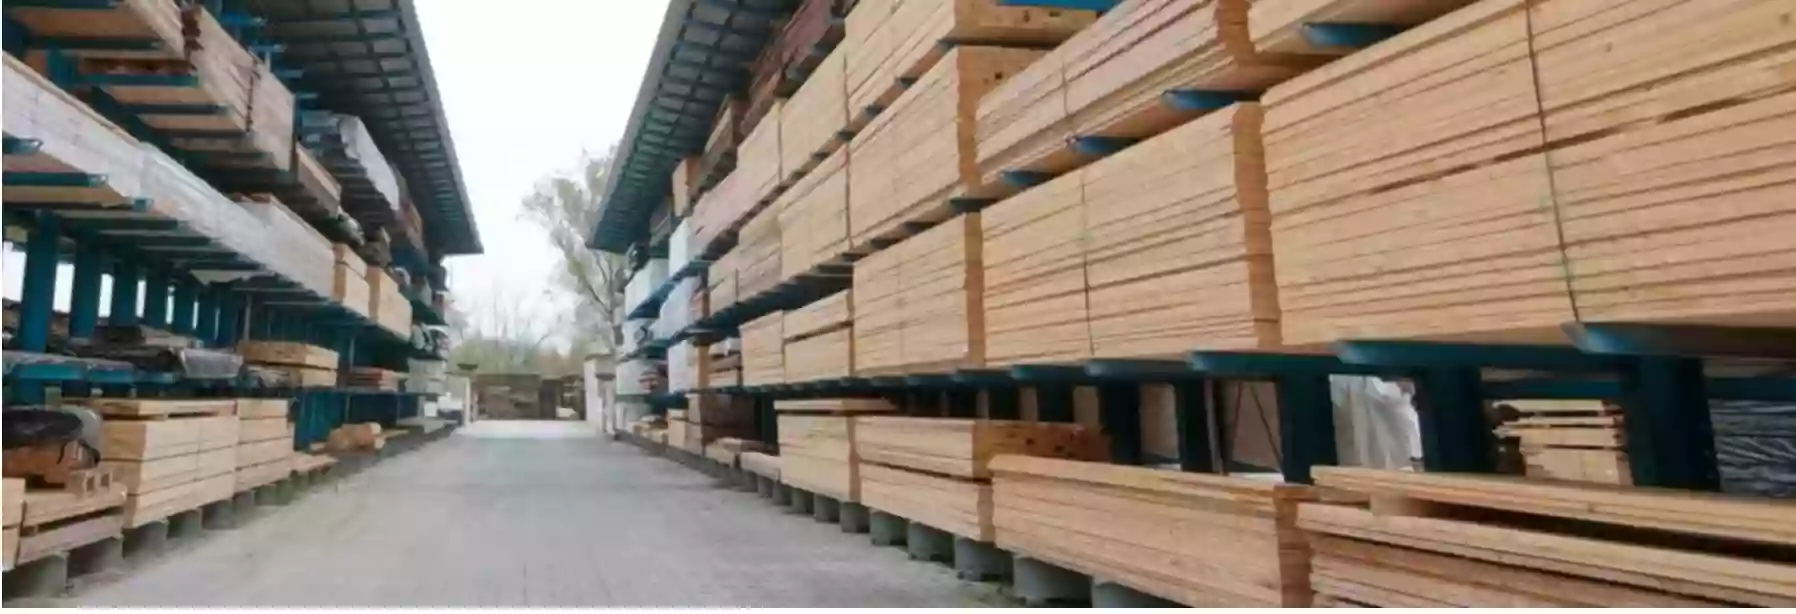 Northern Lumber Co